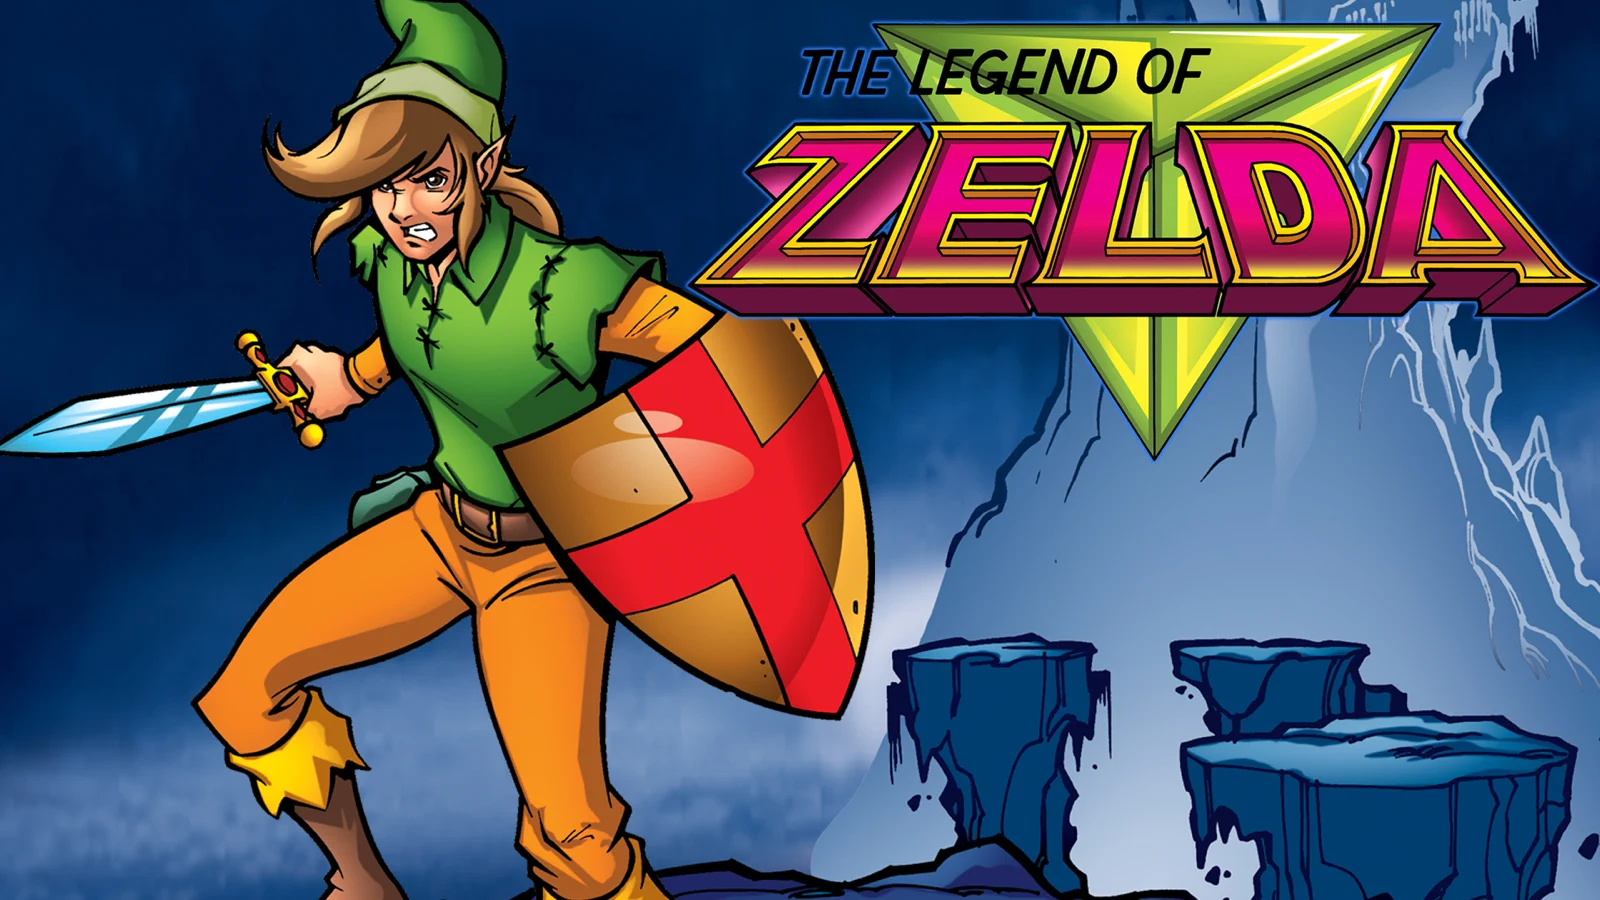 The Legend of Zelda - Wikiwand